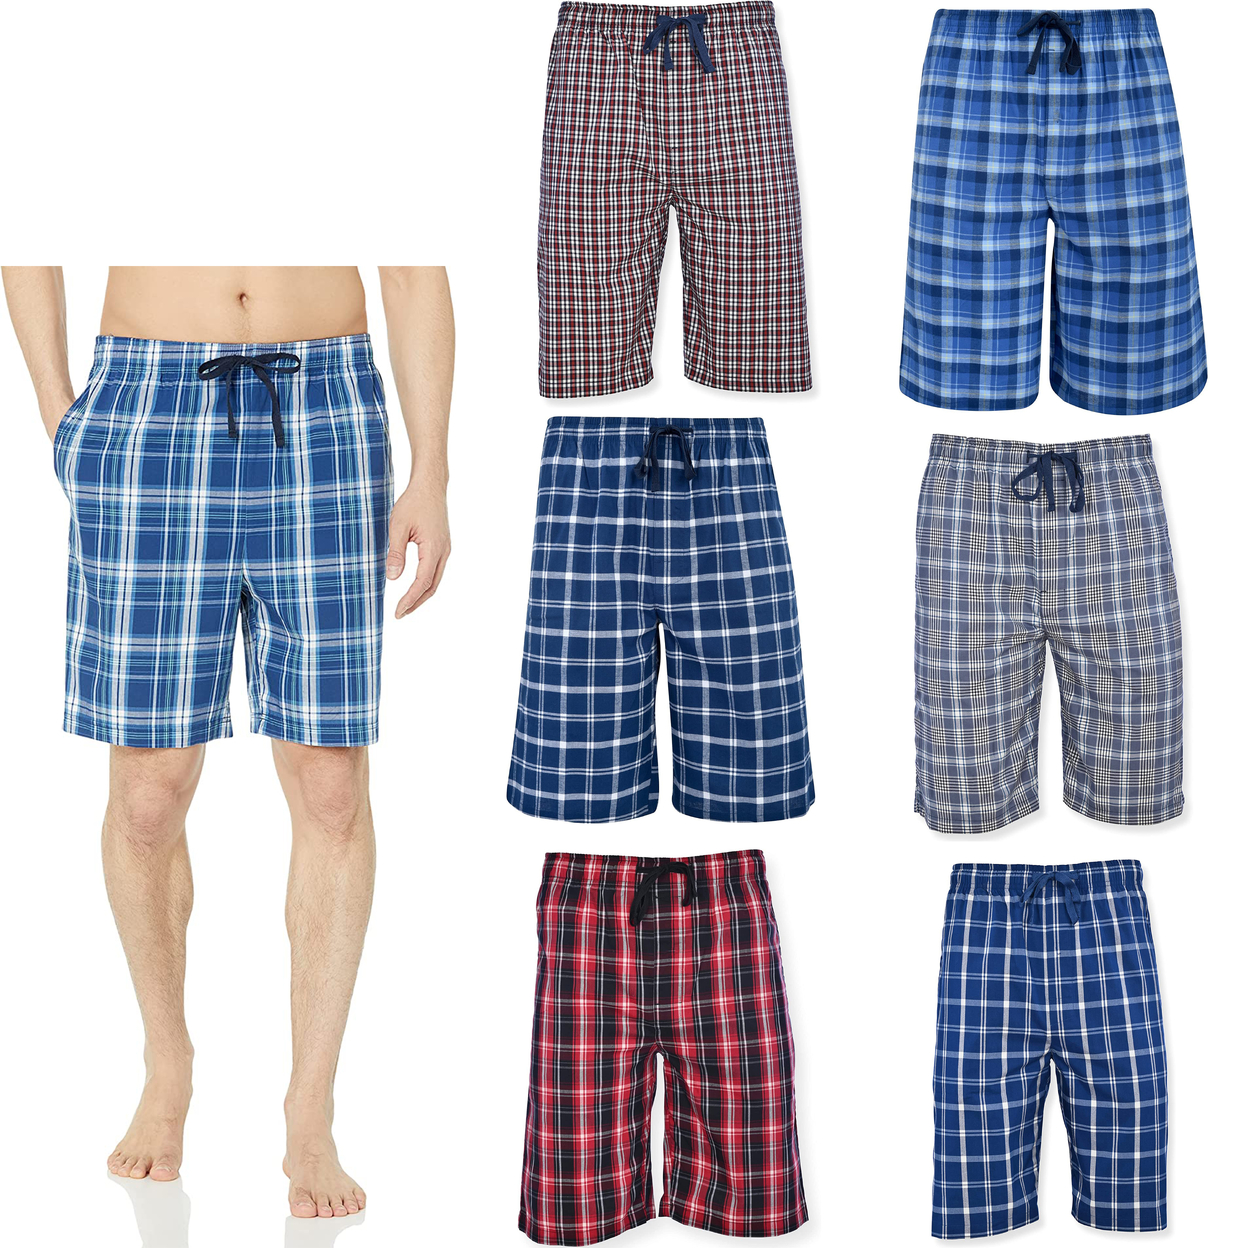 2-Pack: Men's Ultra Soft Plaid Lounge Pajama Sleep Wear Shorts - Black & Red, X-large